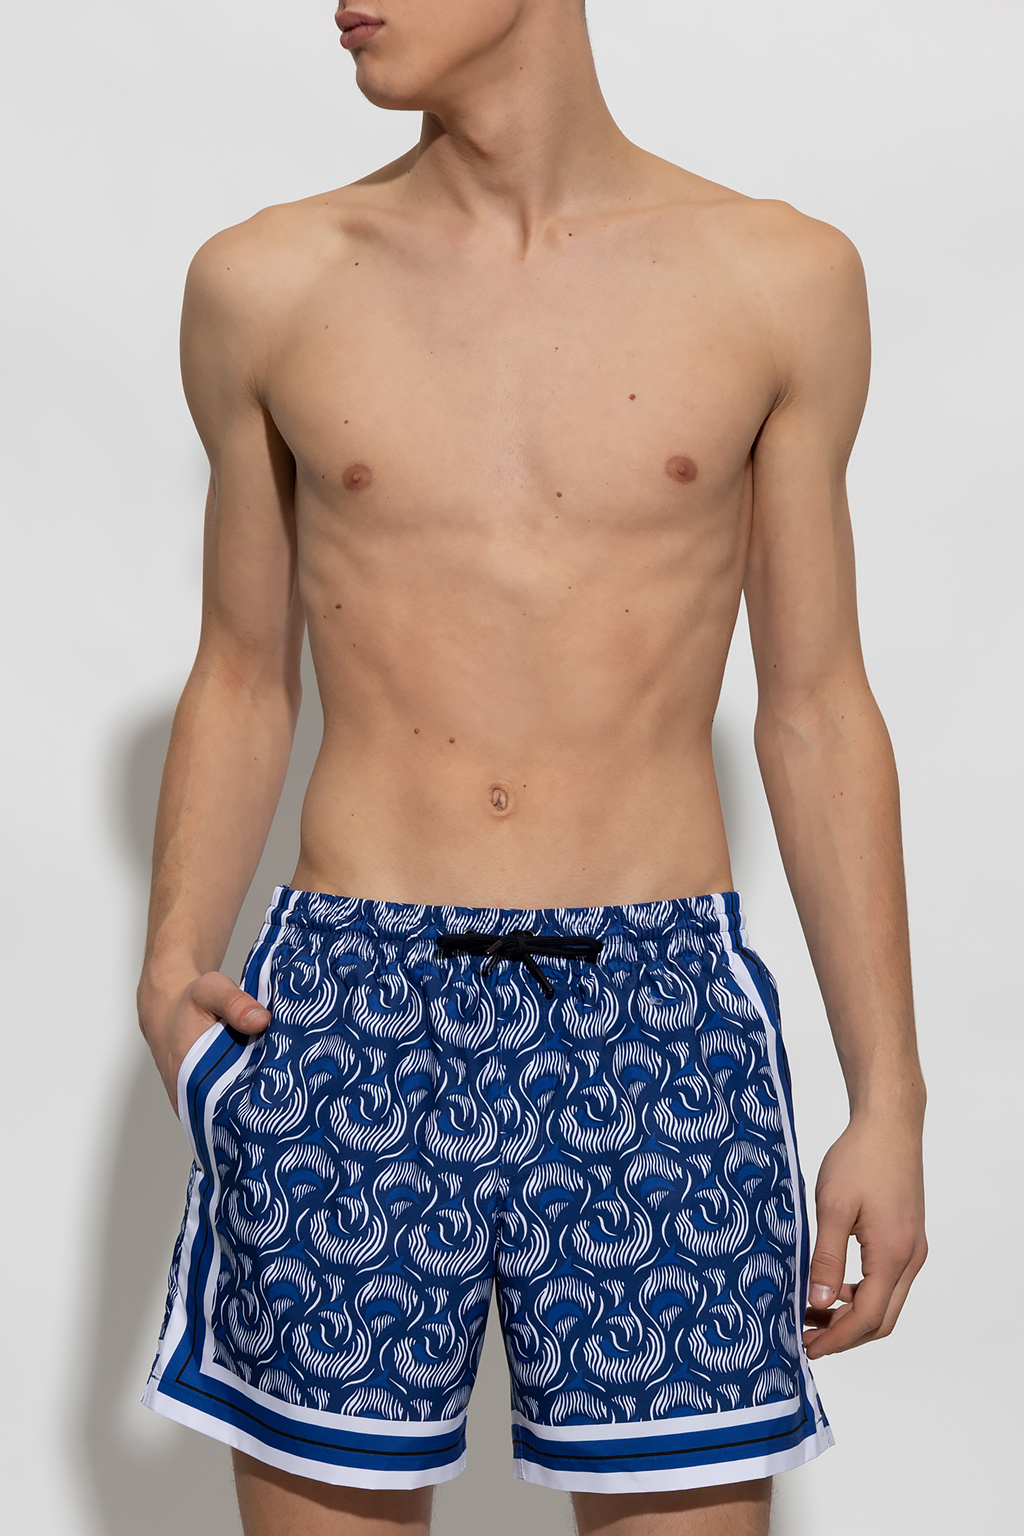 GenesinlifeShops Canada - Gucci square G check tweed shirt dress Toni  neutri - Blue Swimming shorts Dries Van Noten